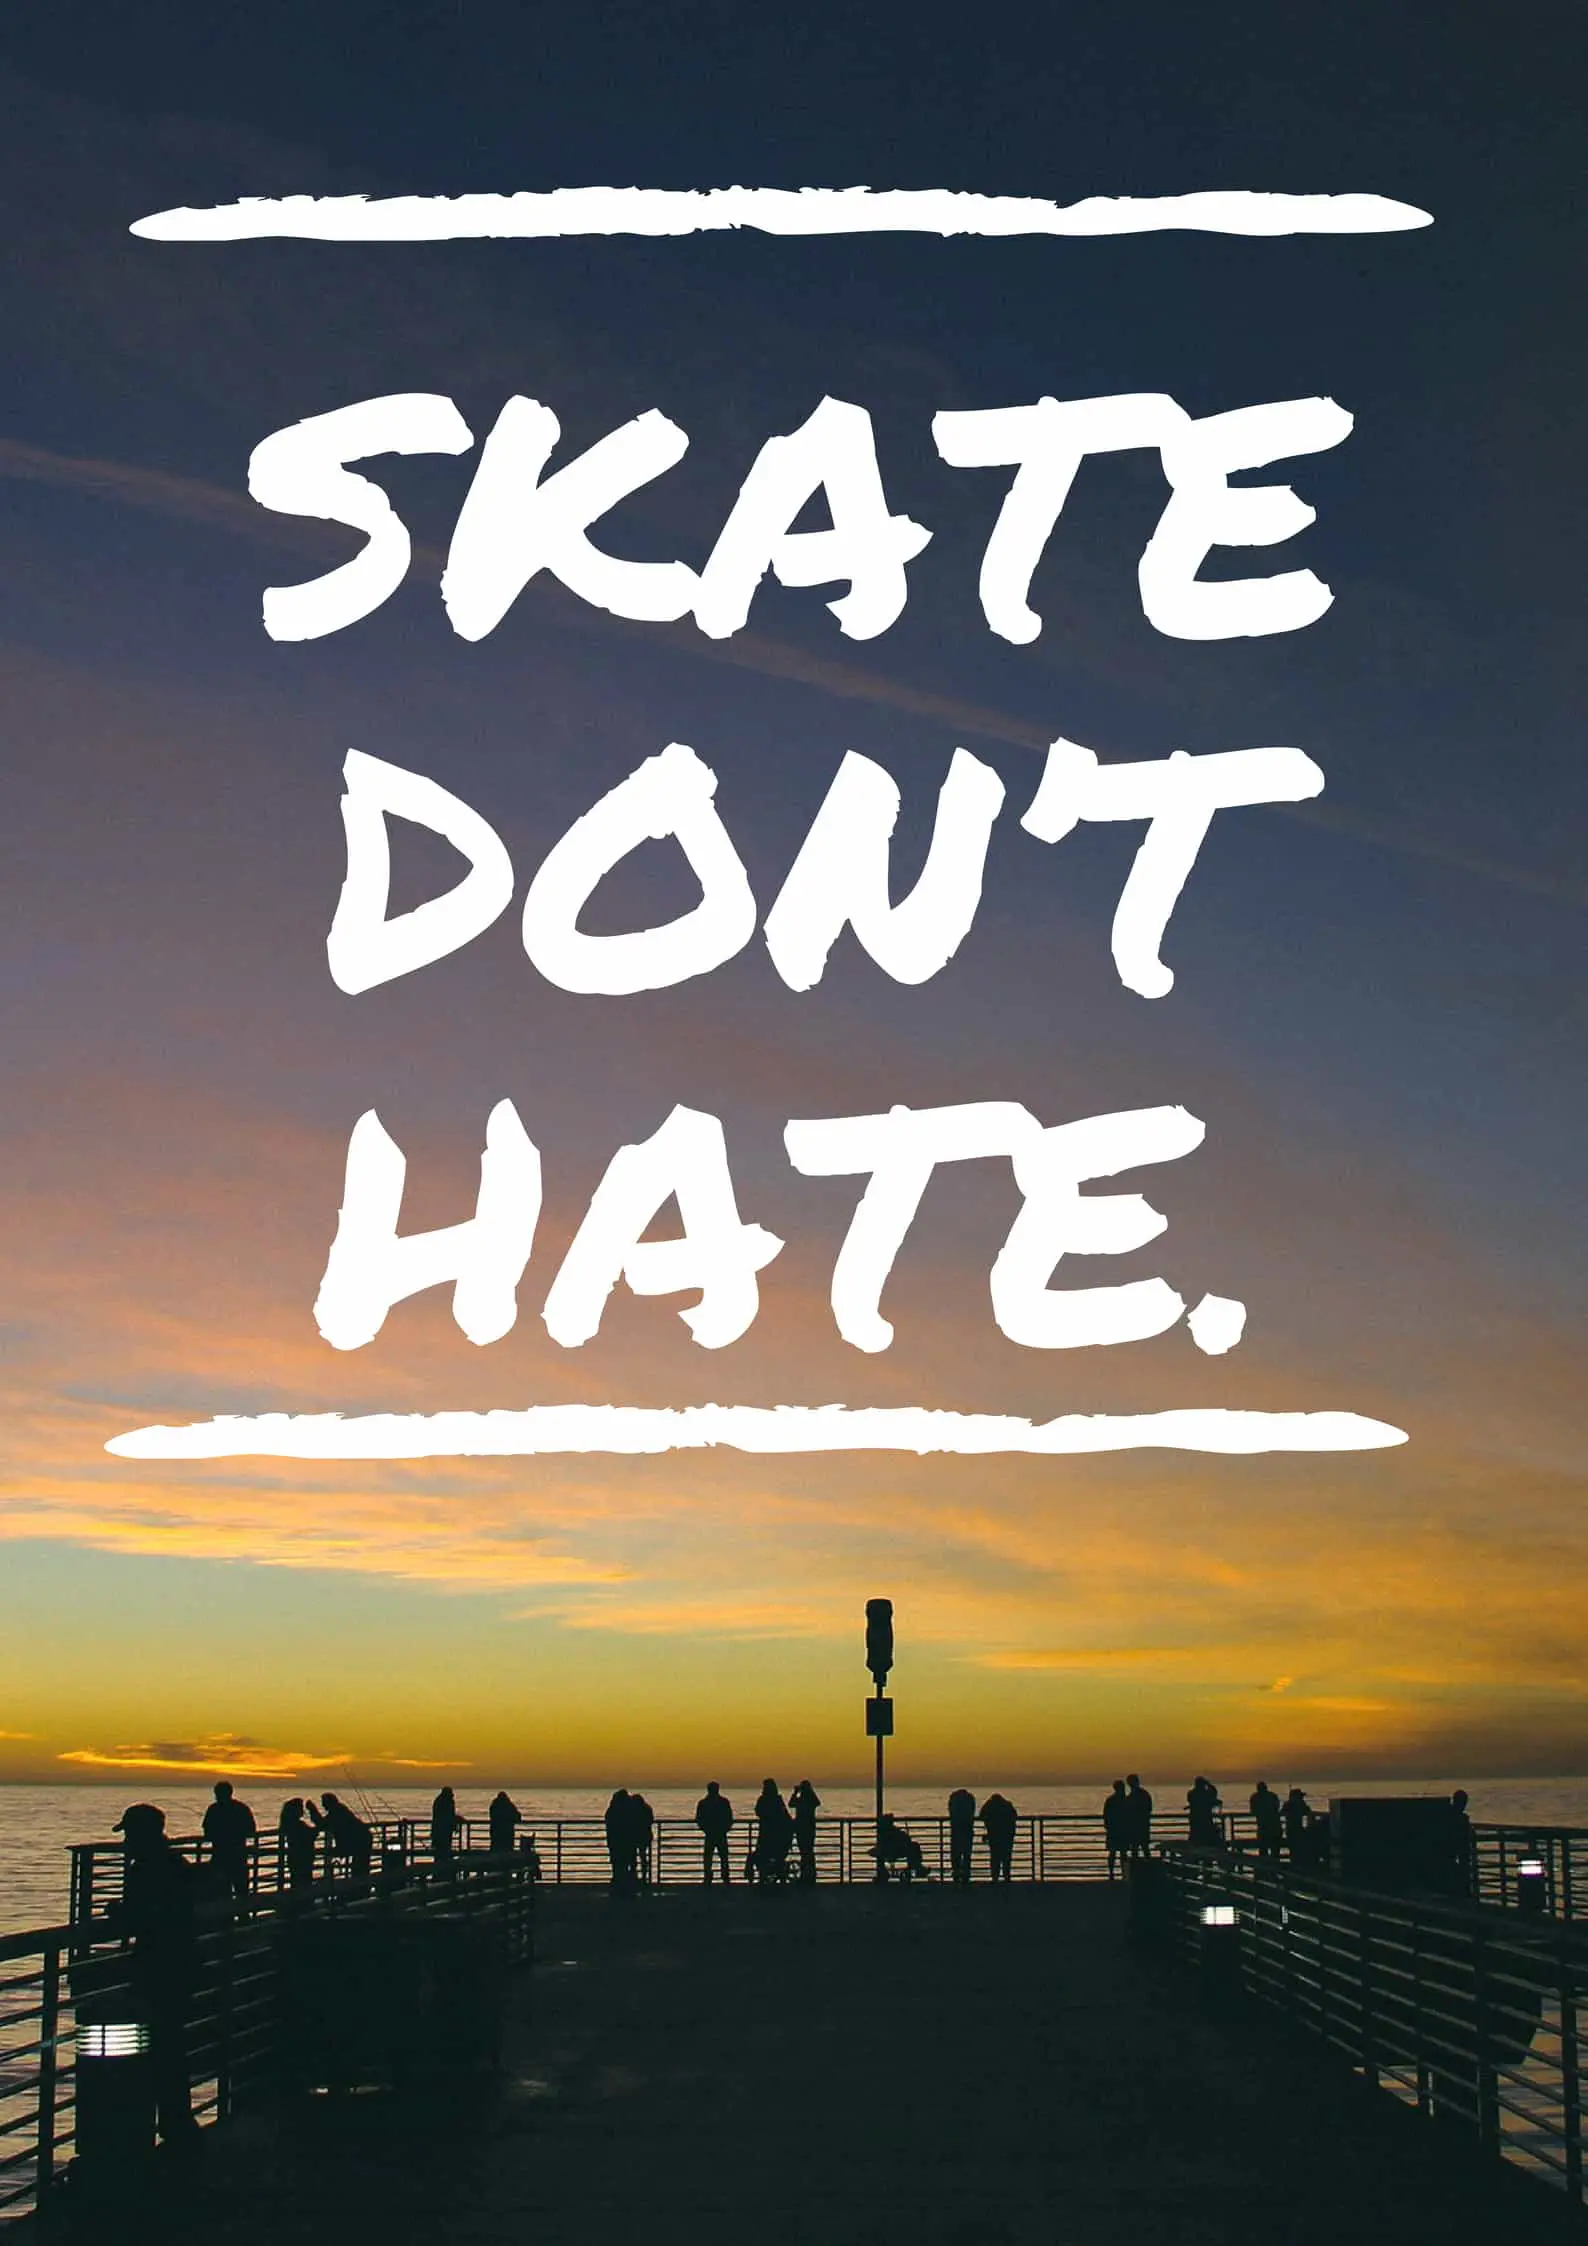 Skate don’t hate.